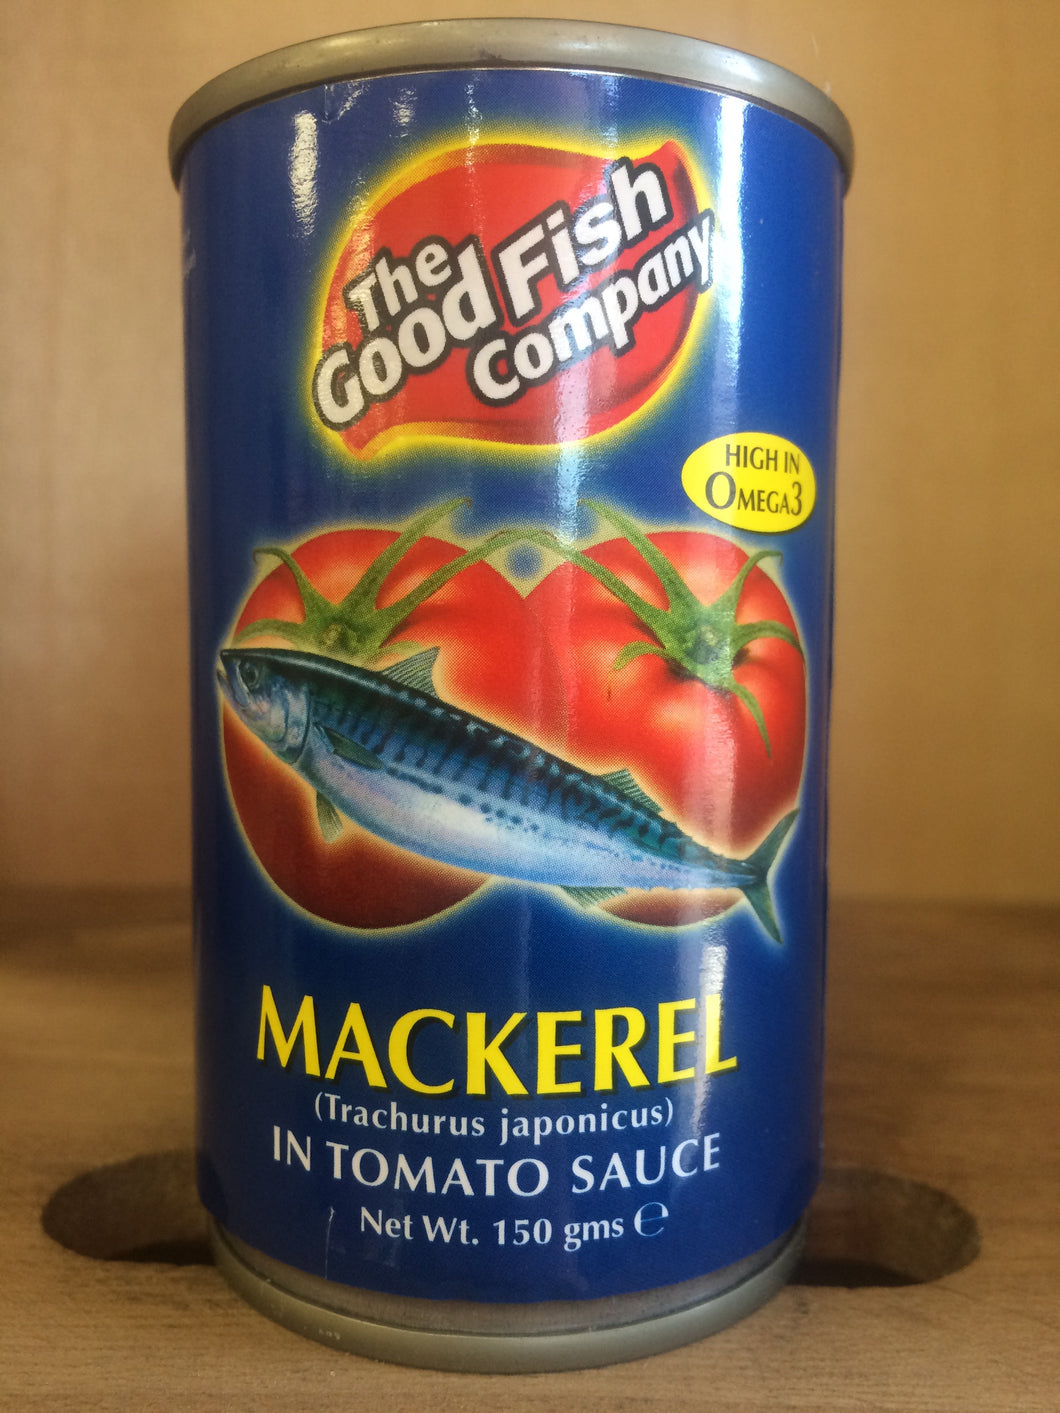 The Good Fish Company Mackerel in Tomato Sauce 150g